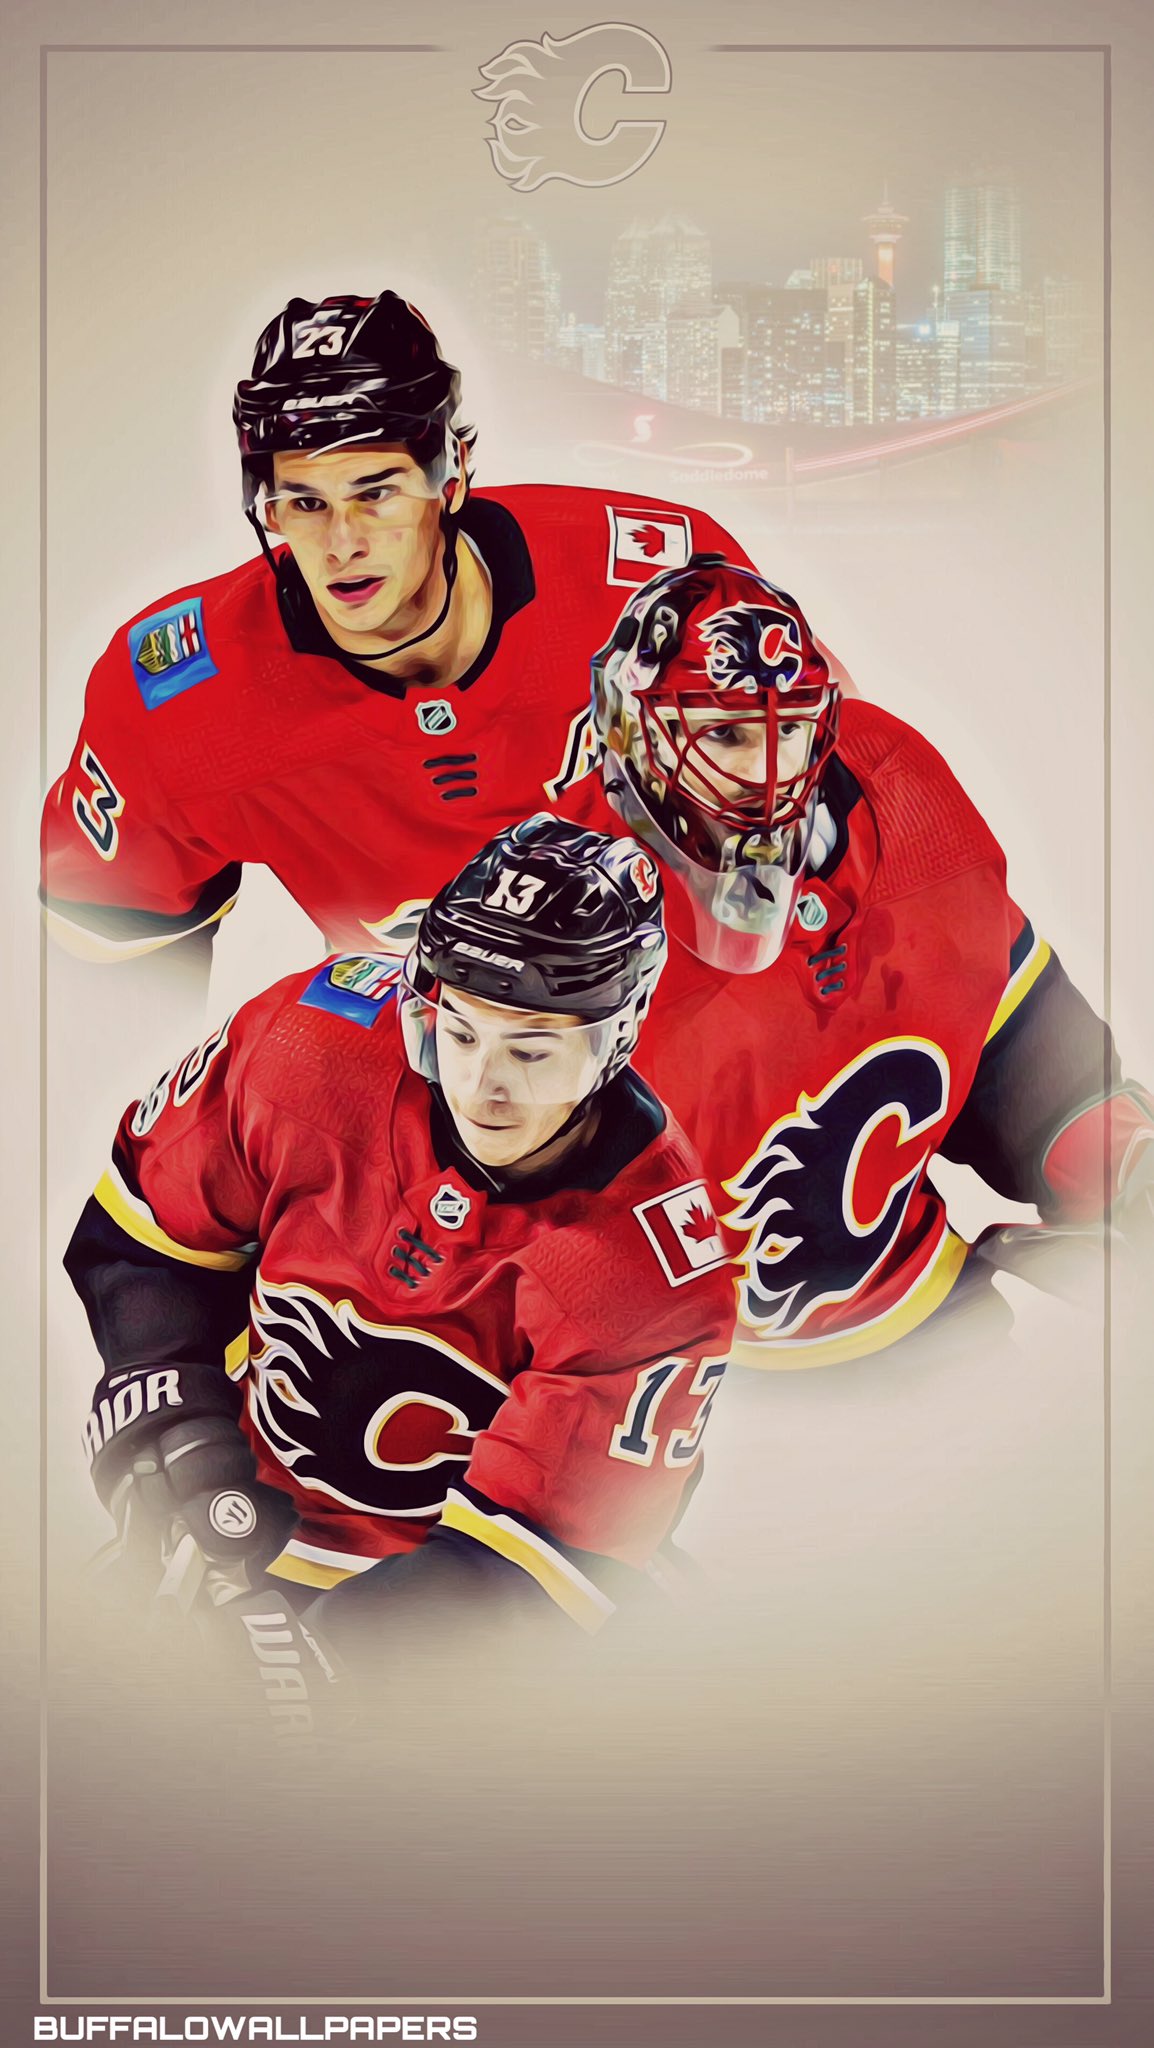 Jordan Santalucia on X: @chommymann Miracle On Ice iPhone wallpaper #USA  #NHL #DoYouBelieveInMiracles?  / X